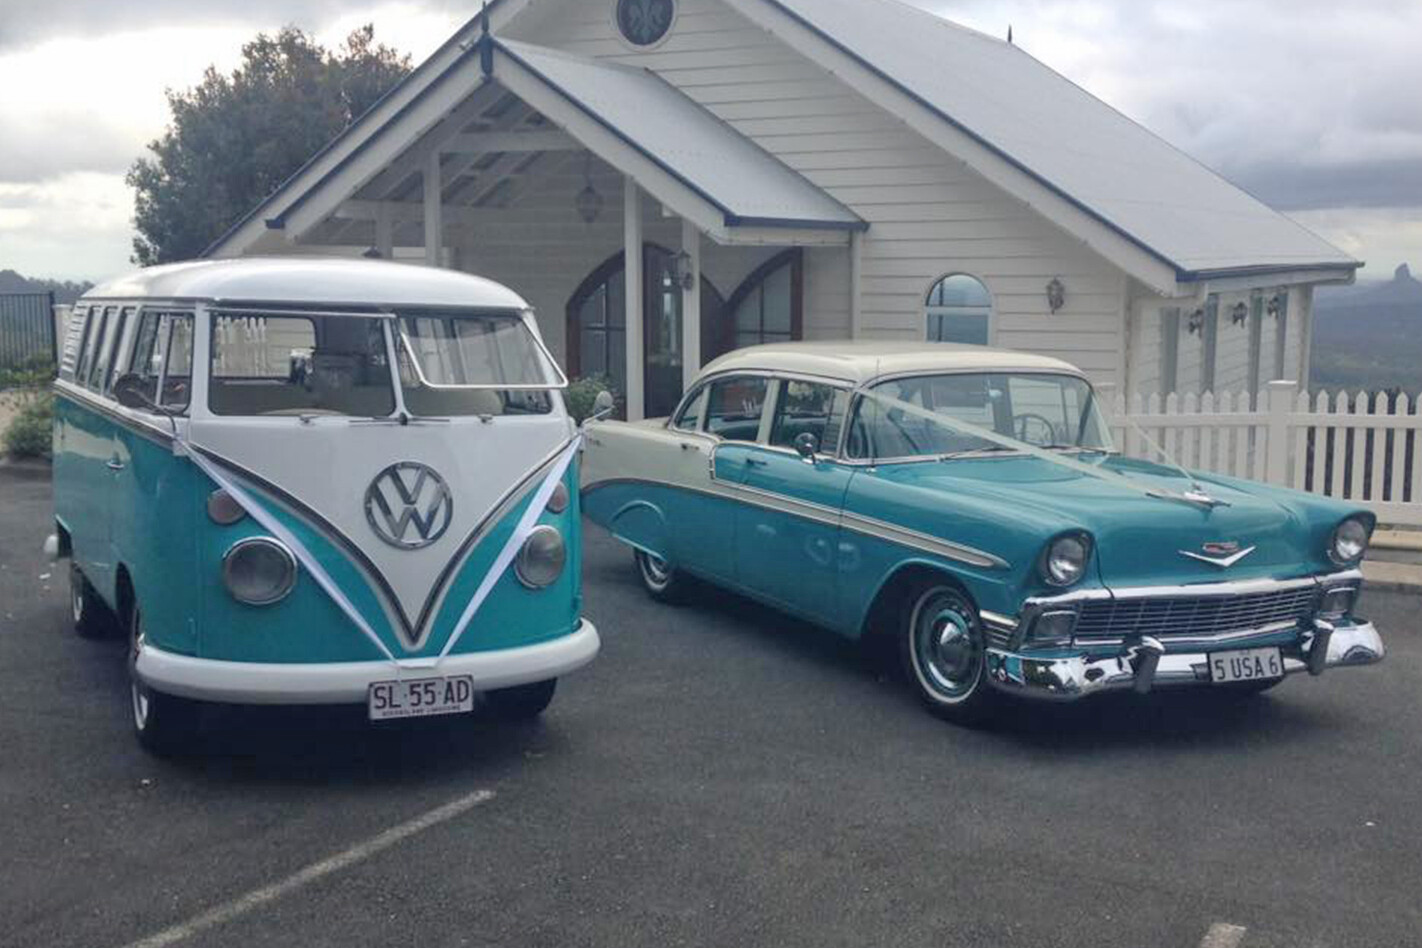 Ross Dunstan's wedding cars